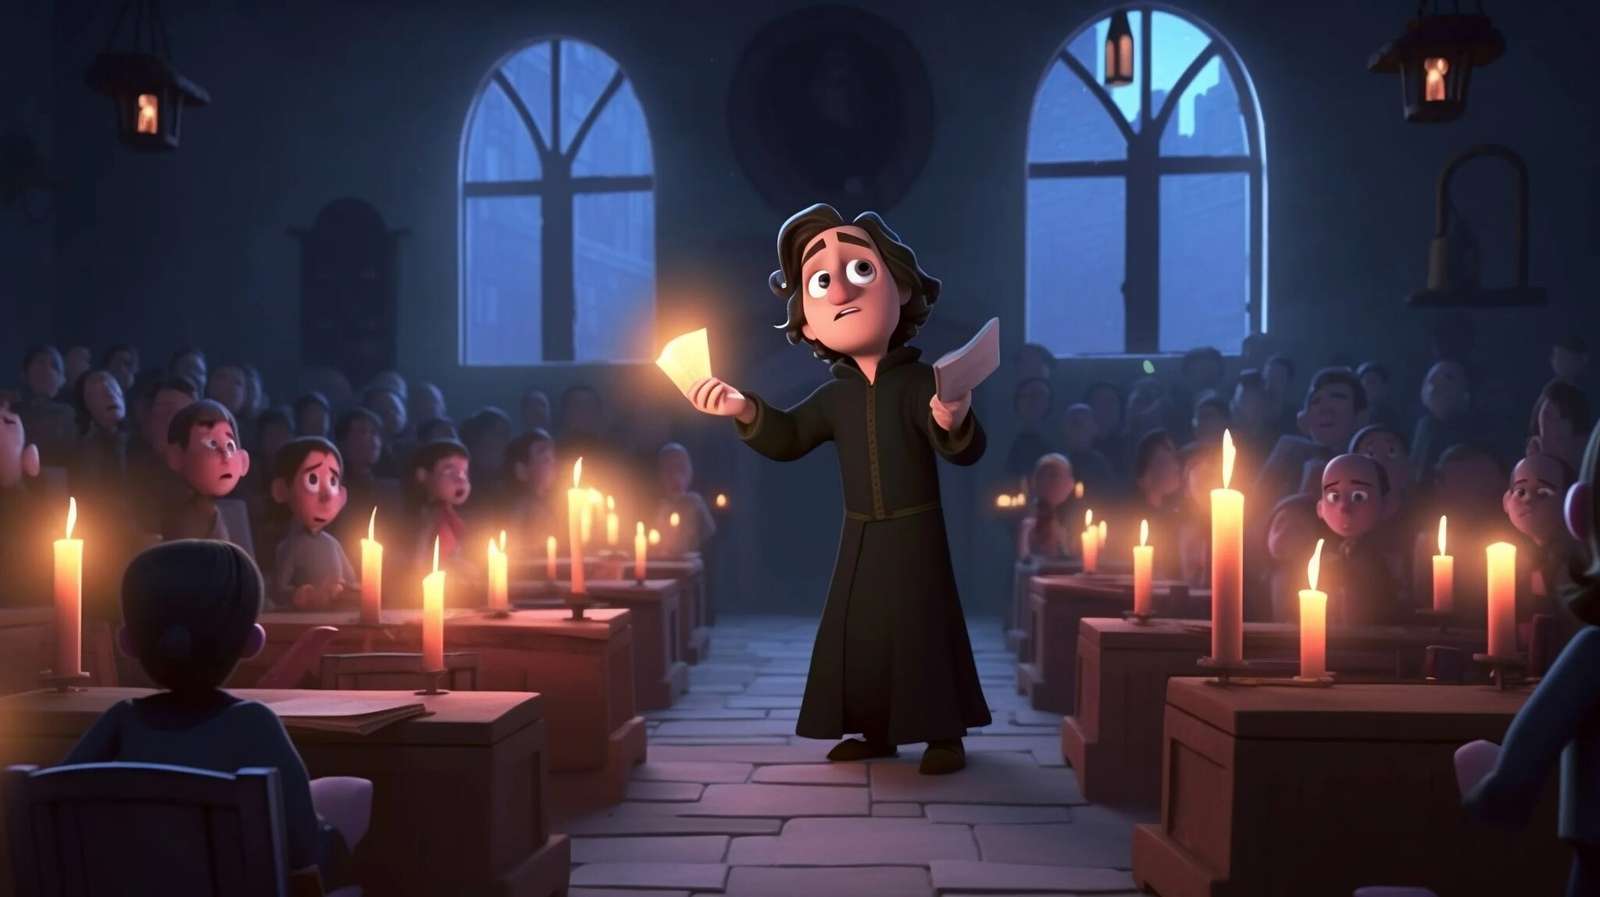 Severus Snape rompecabezas en línea